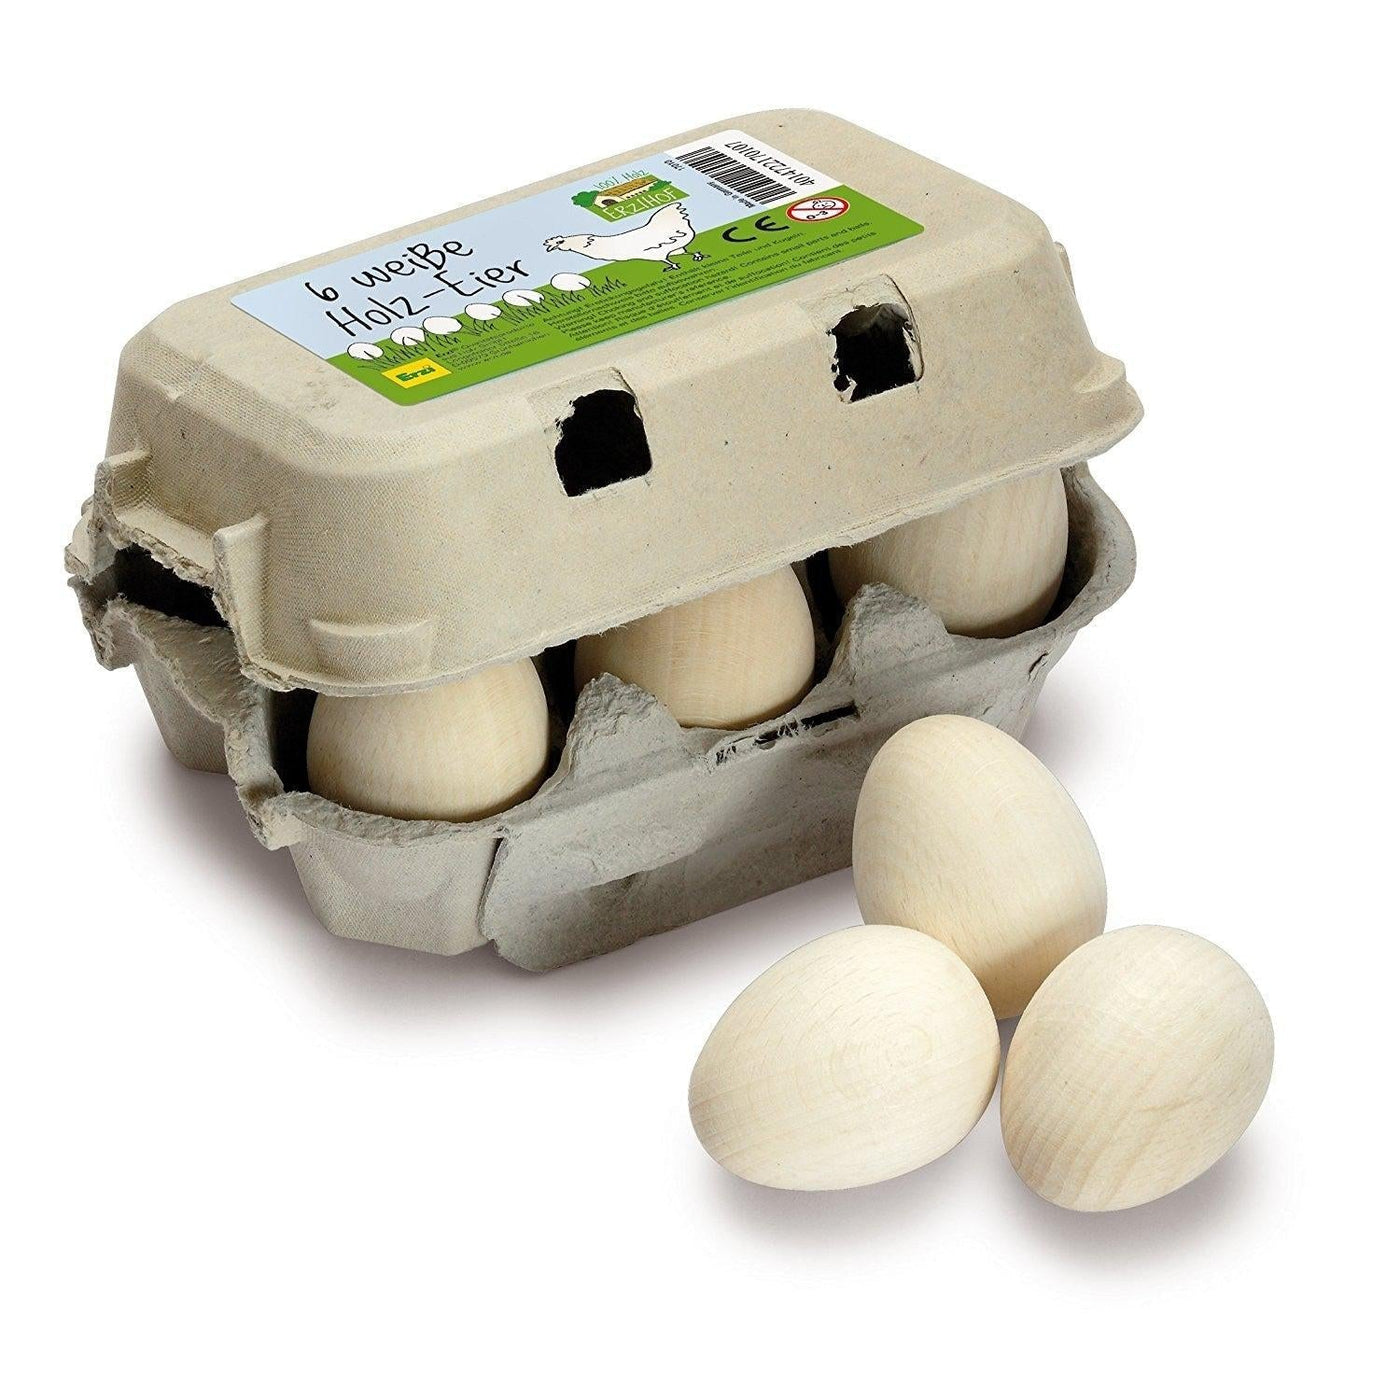 Erzi Sixpack Eggs - White - Wooden Play Food